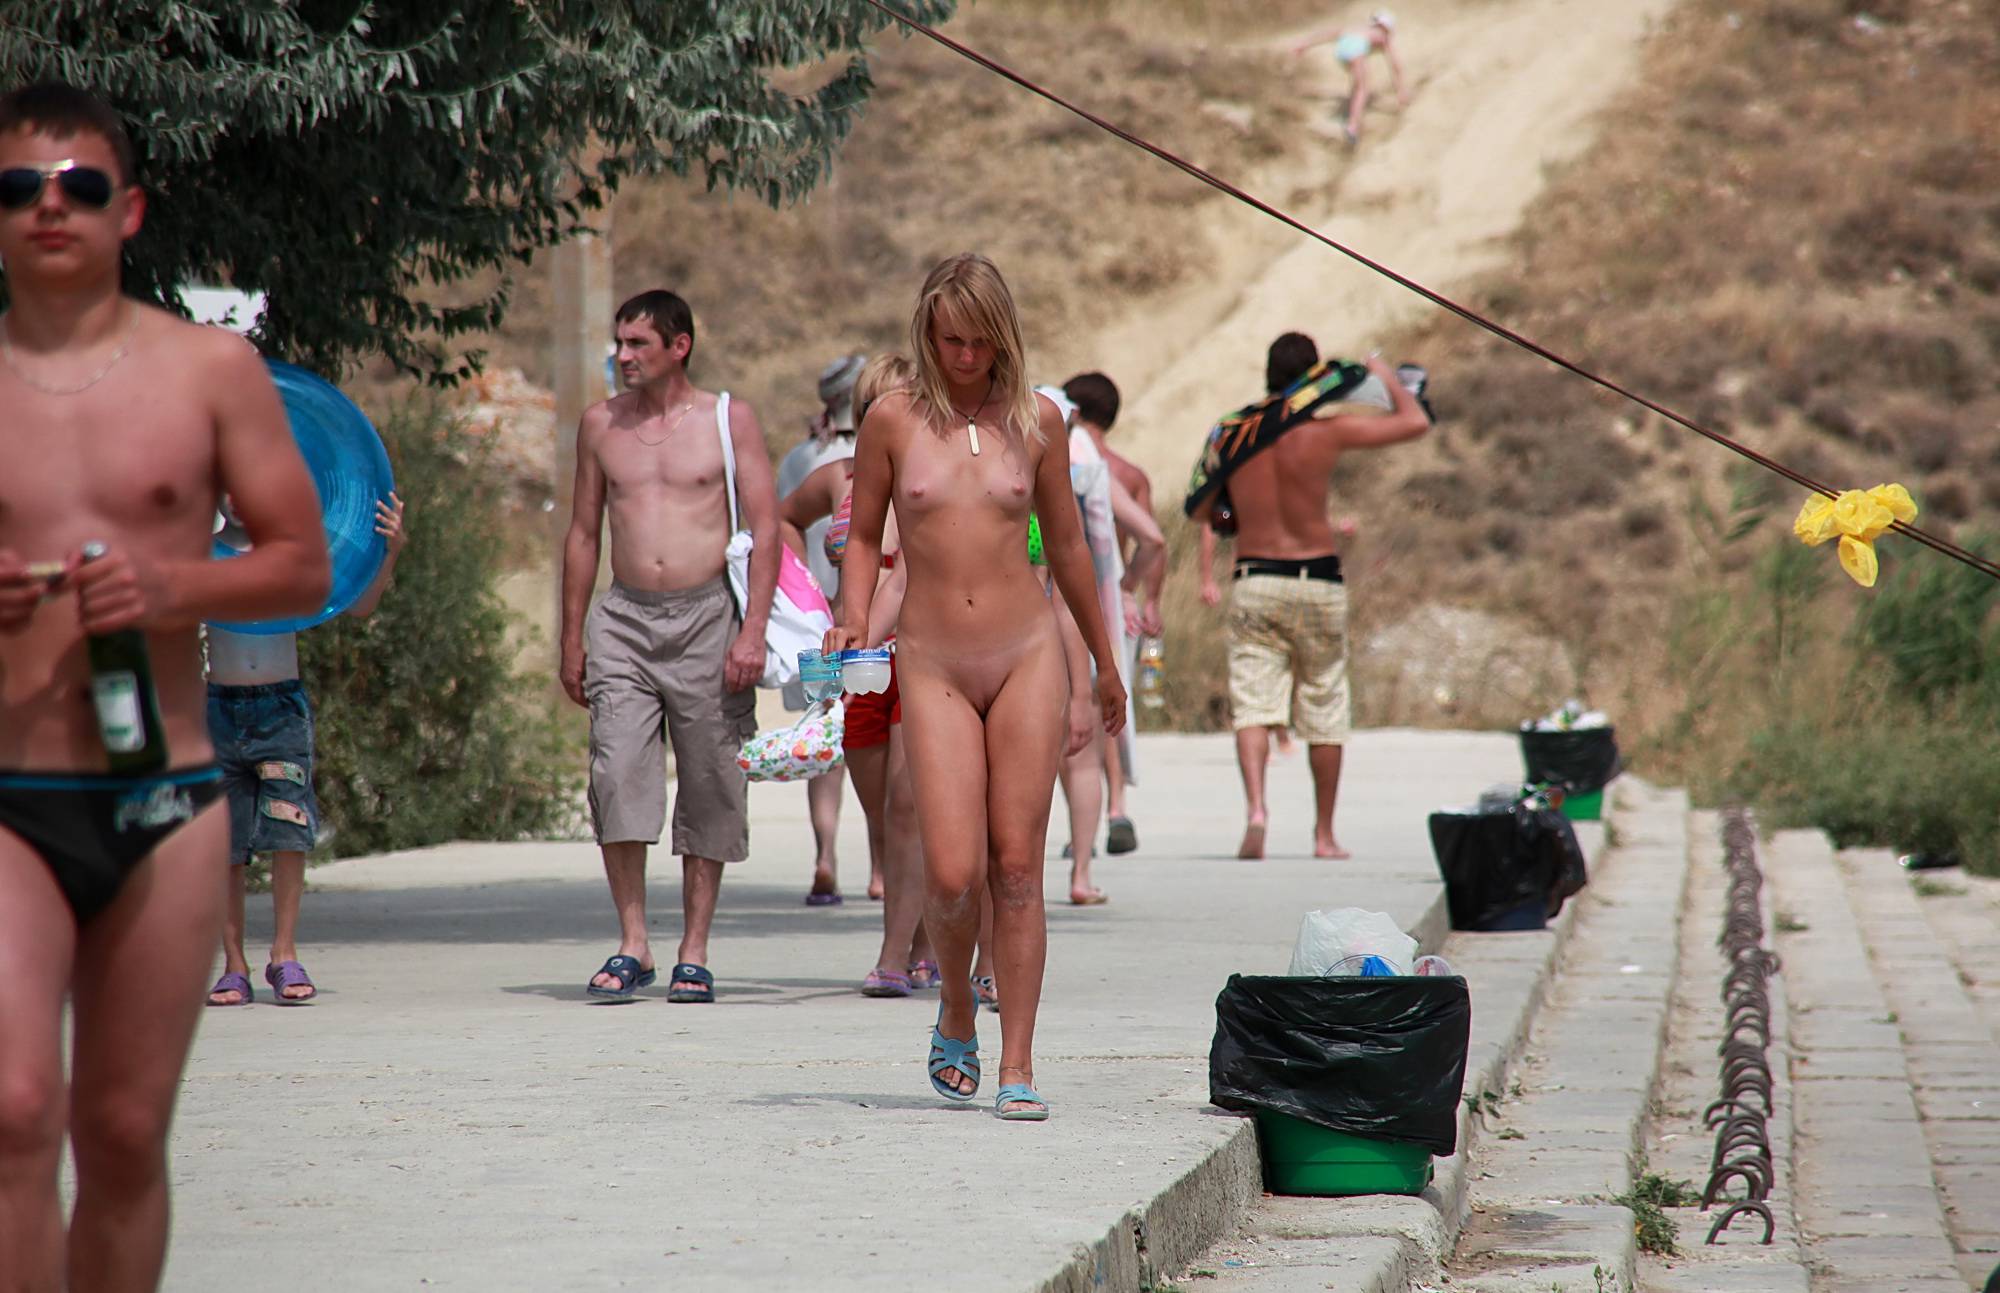 Nudist Photos Large Outdoor Festival - 1